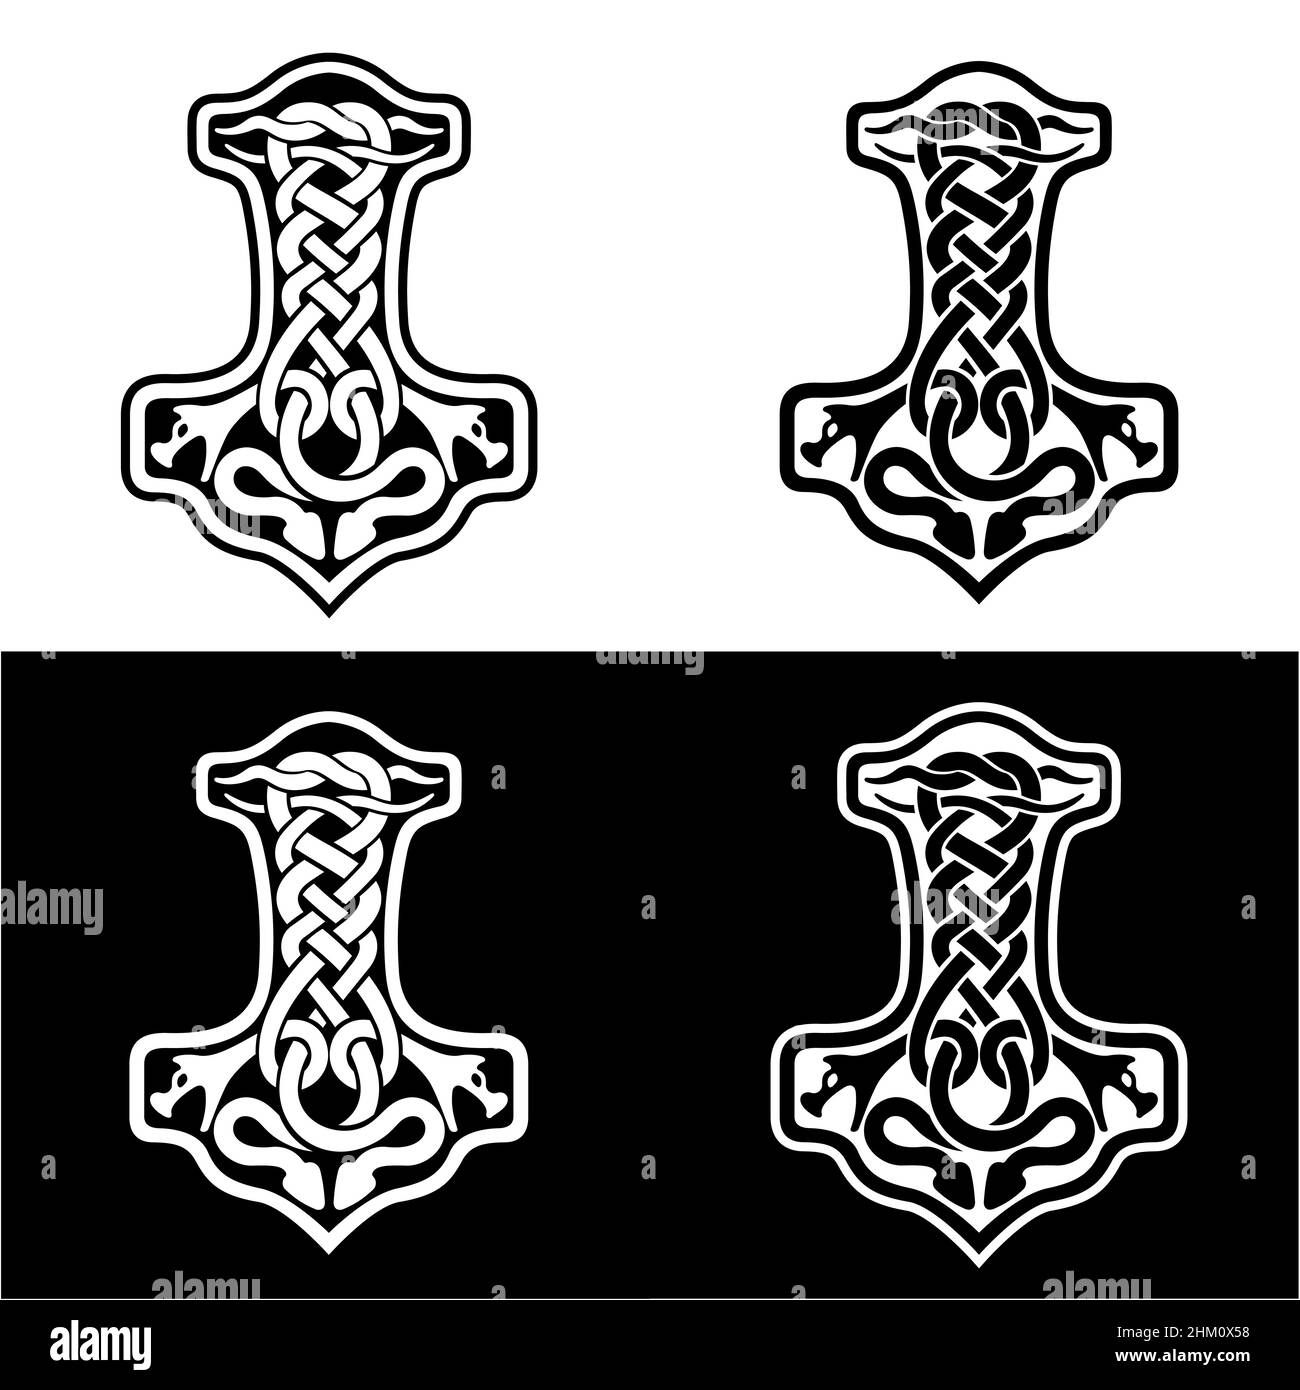 Hammer of Thor Mjolnir Celtic knot, Scandinavian Viking style ornament. Hand drawing set. Isolated vector illustration. Stock Vector